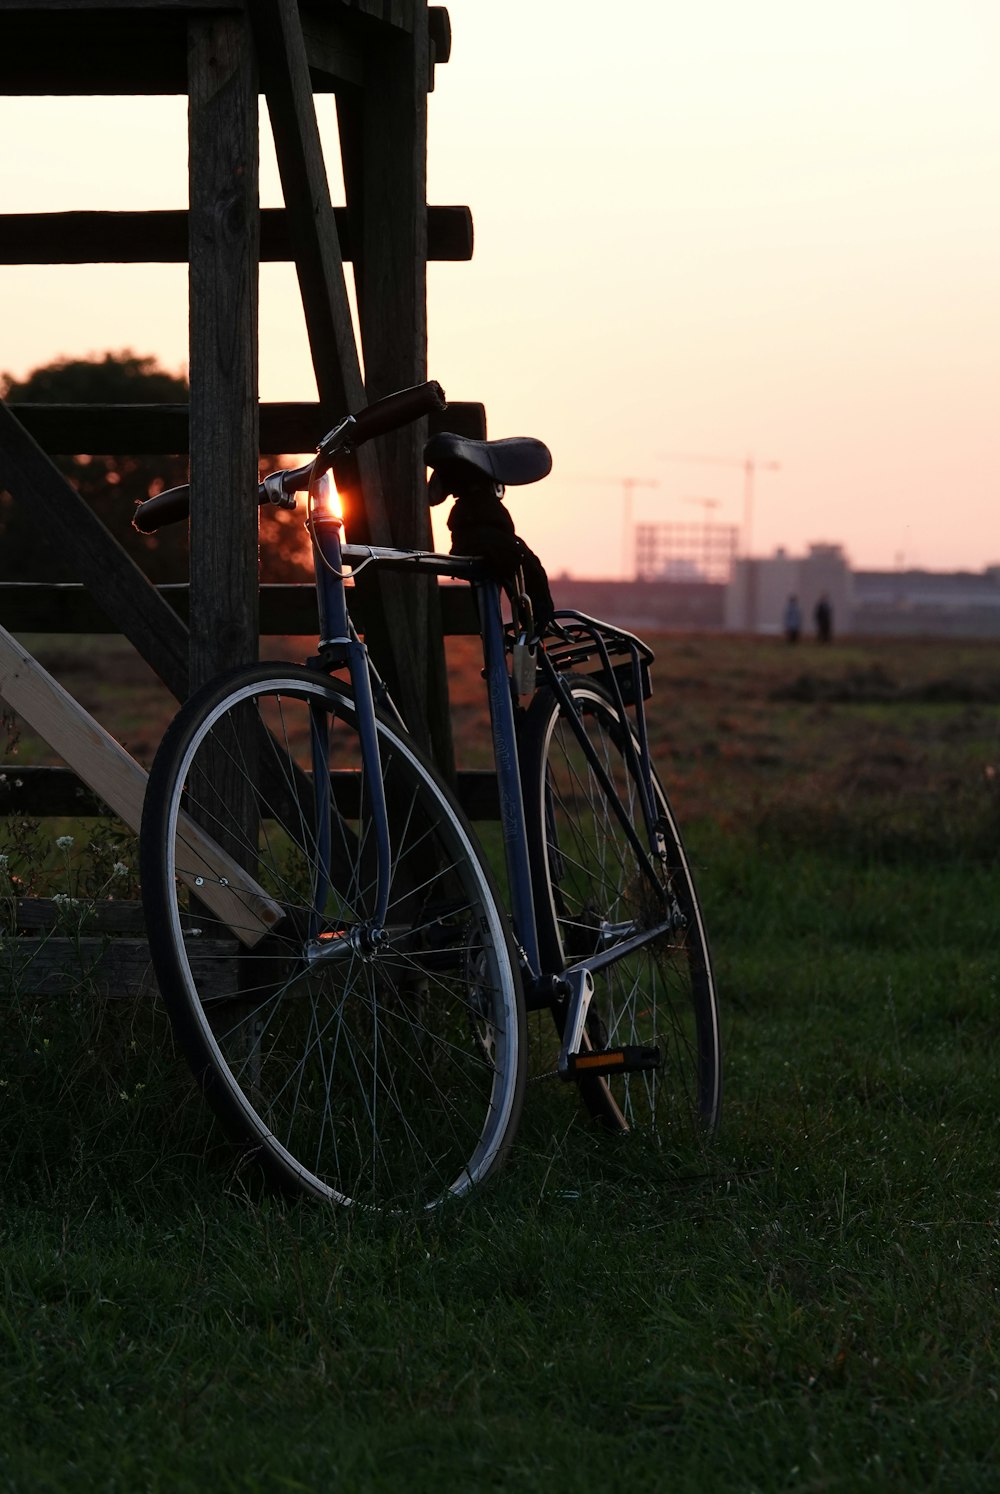 black commuter bike near brown wooden fence during sunset